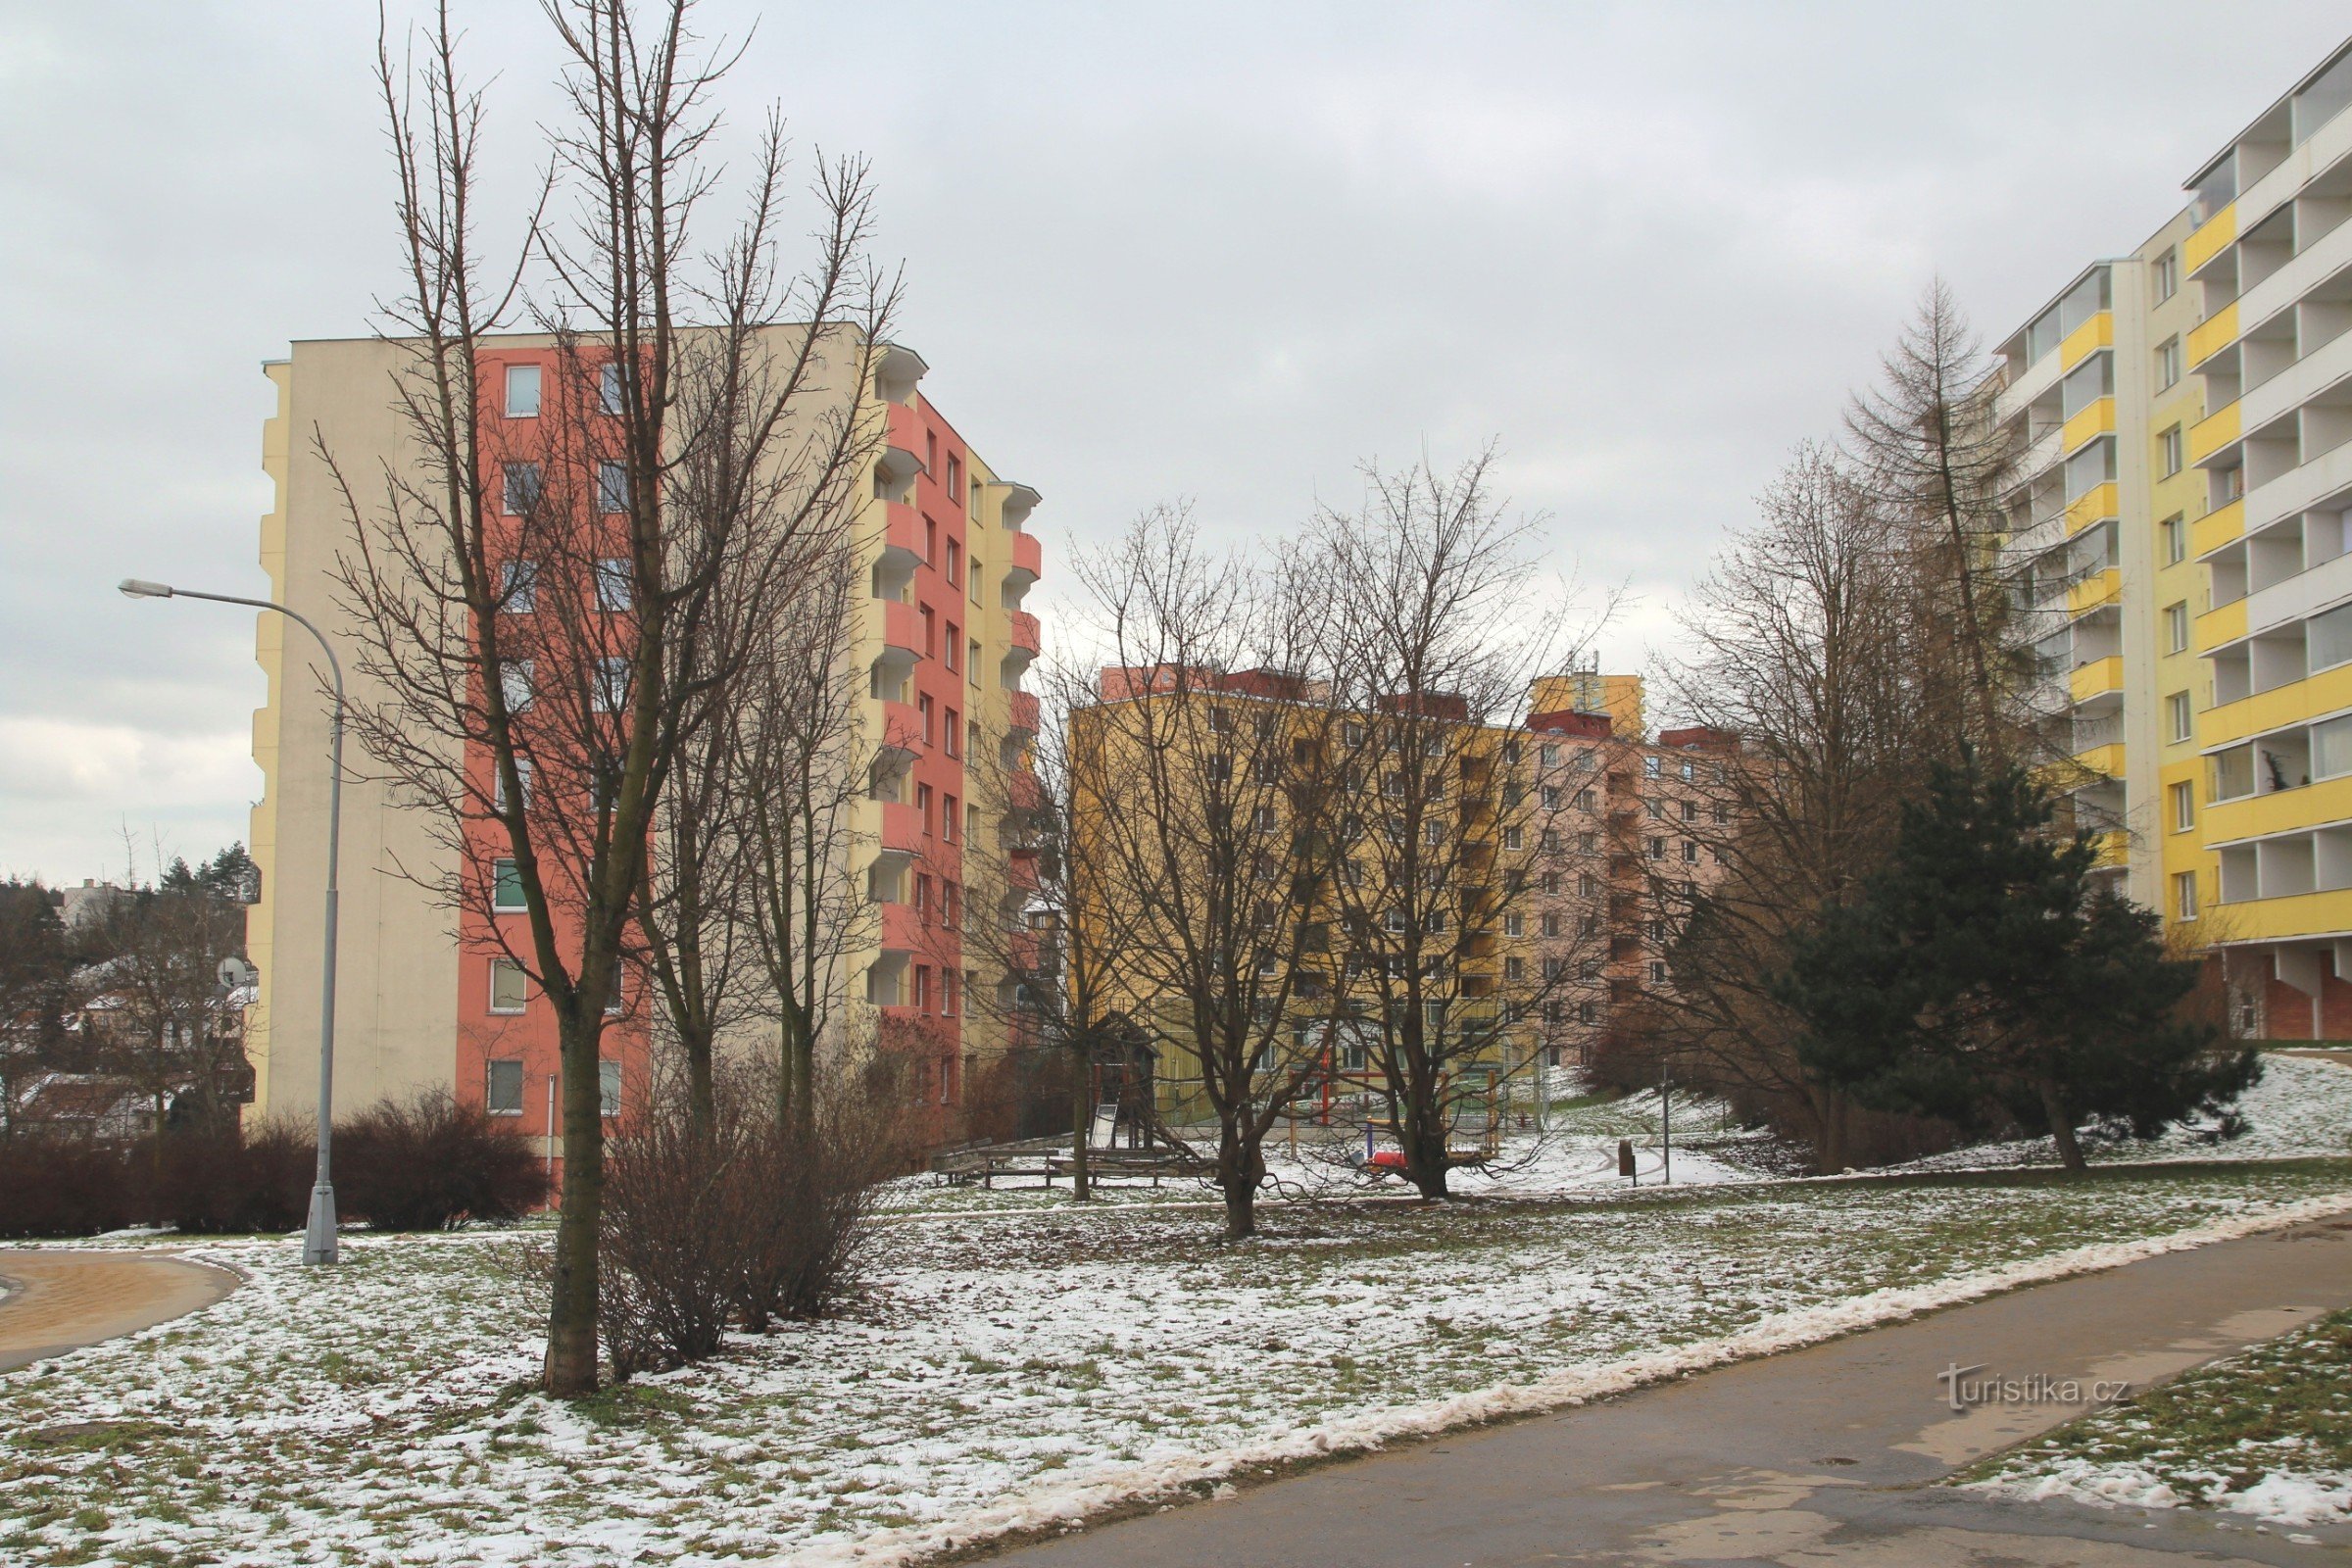 Housing part in the vicinity of Myslivečkova